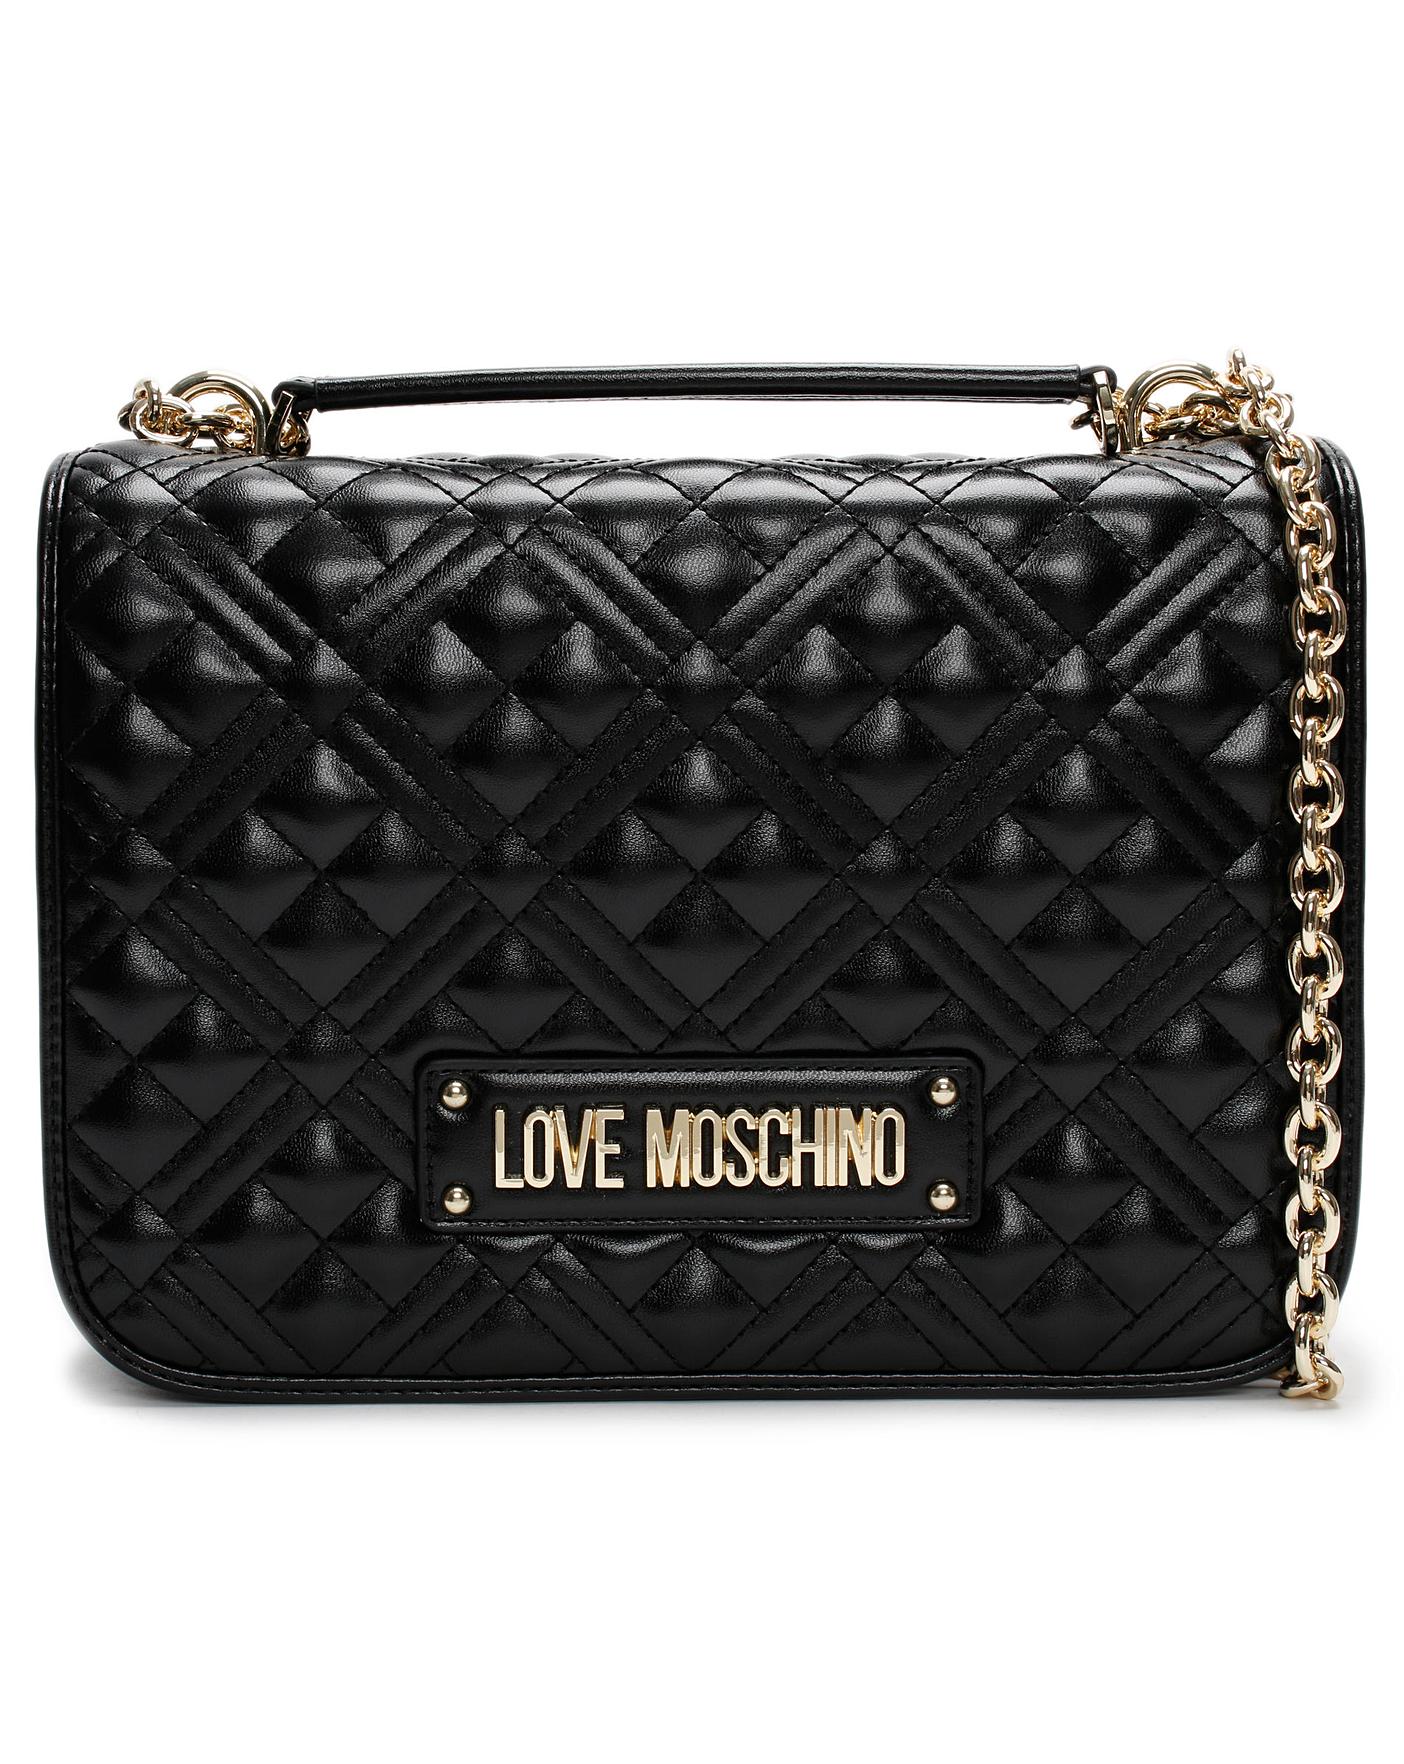 love moschino handbags